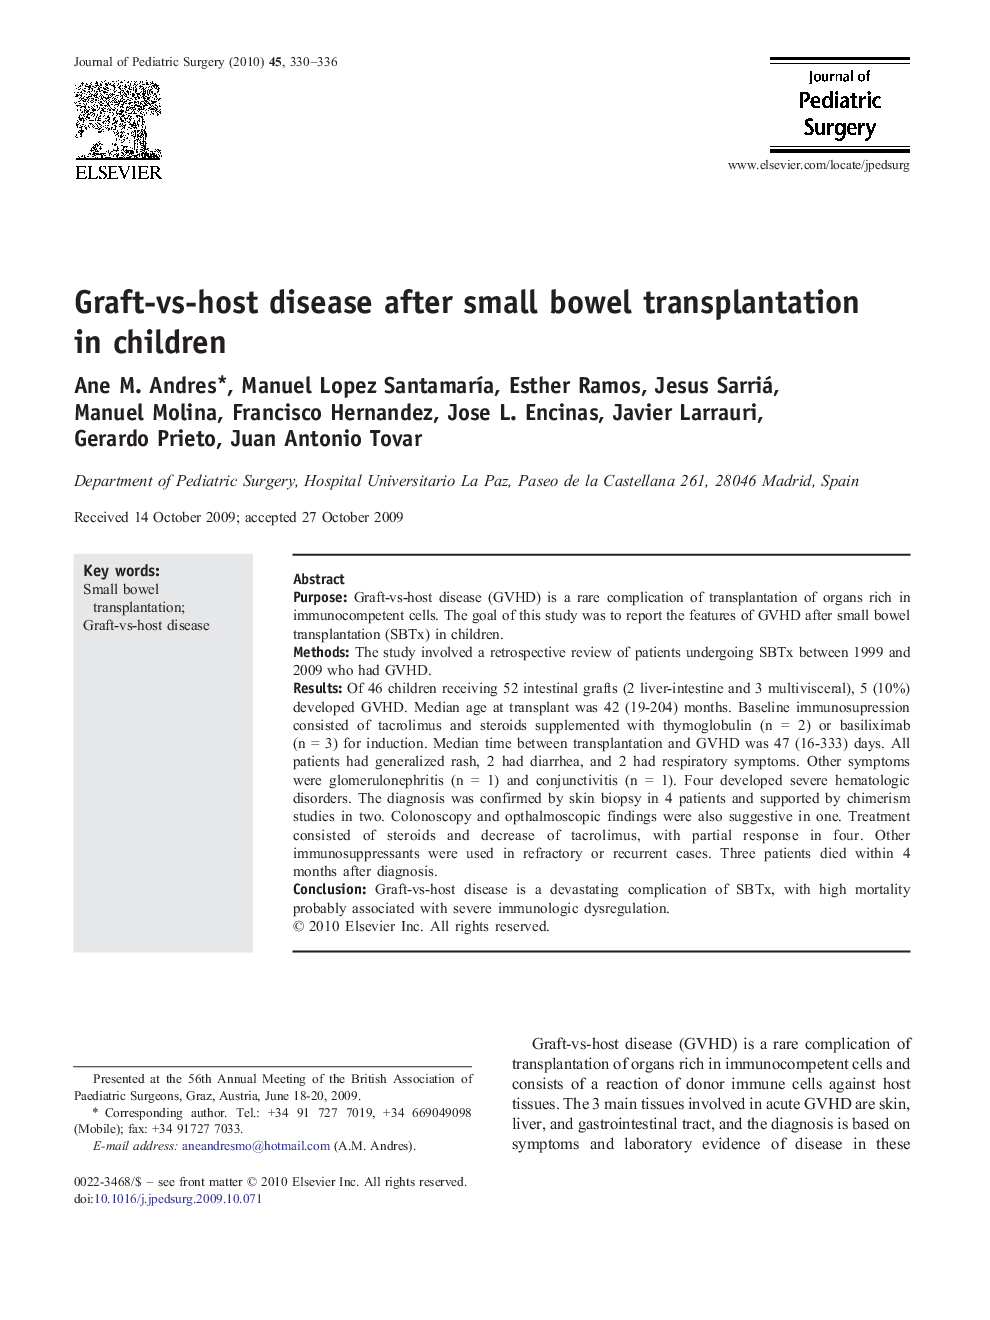 Graft-vs-host disease after small bowel transplantation in children 